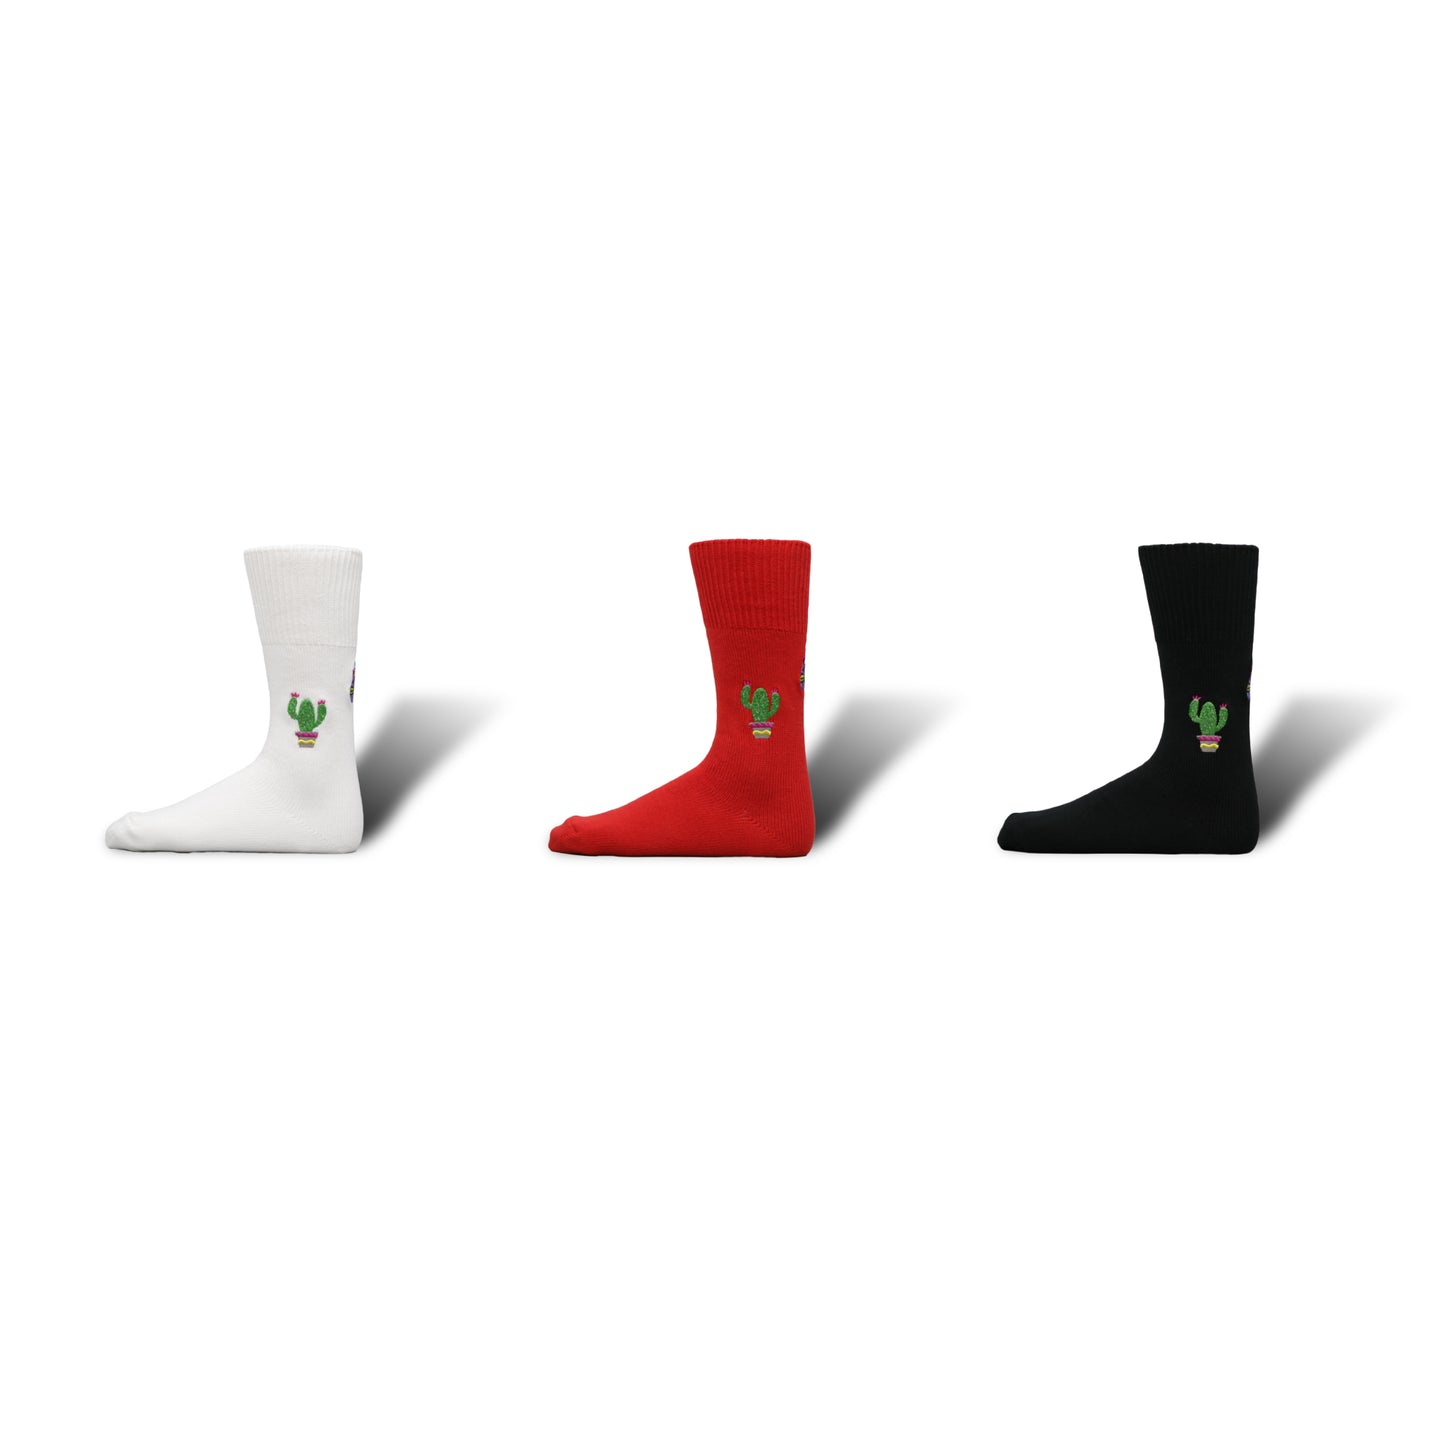 Souvenir Socks | Mexico